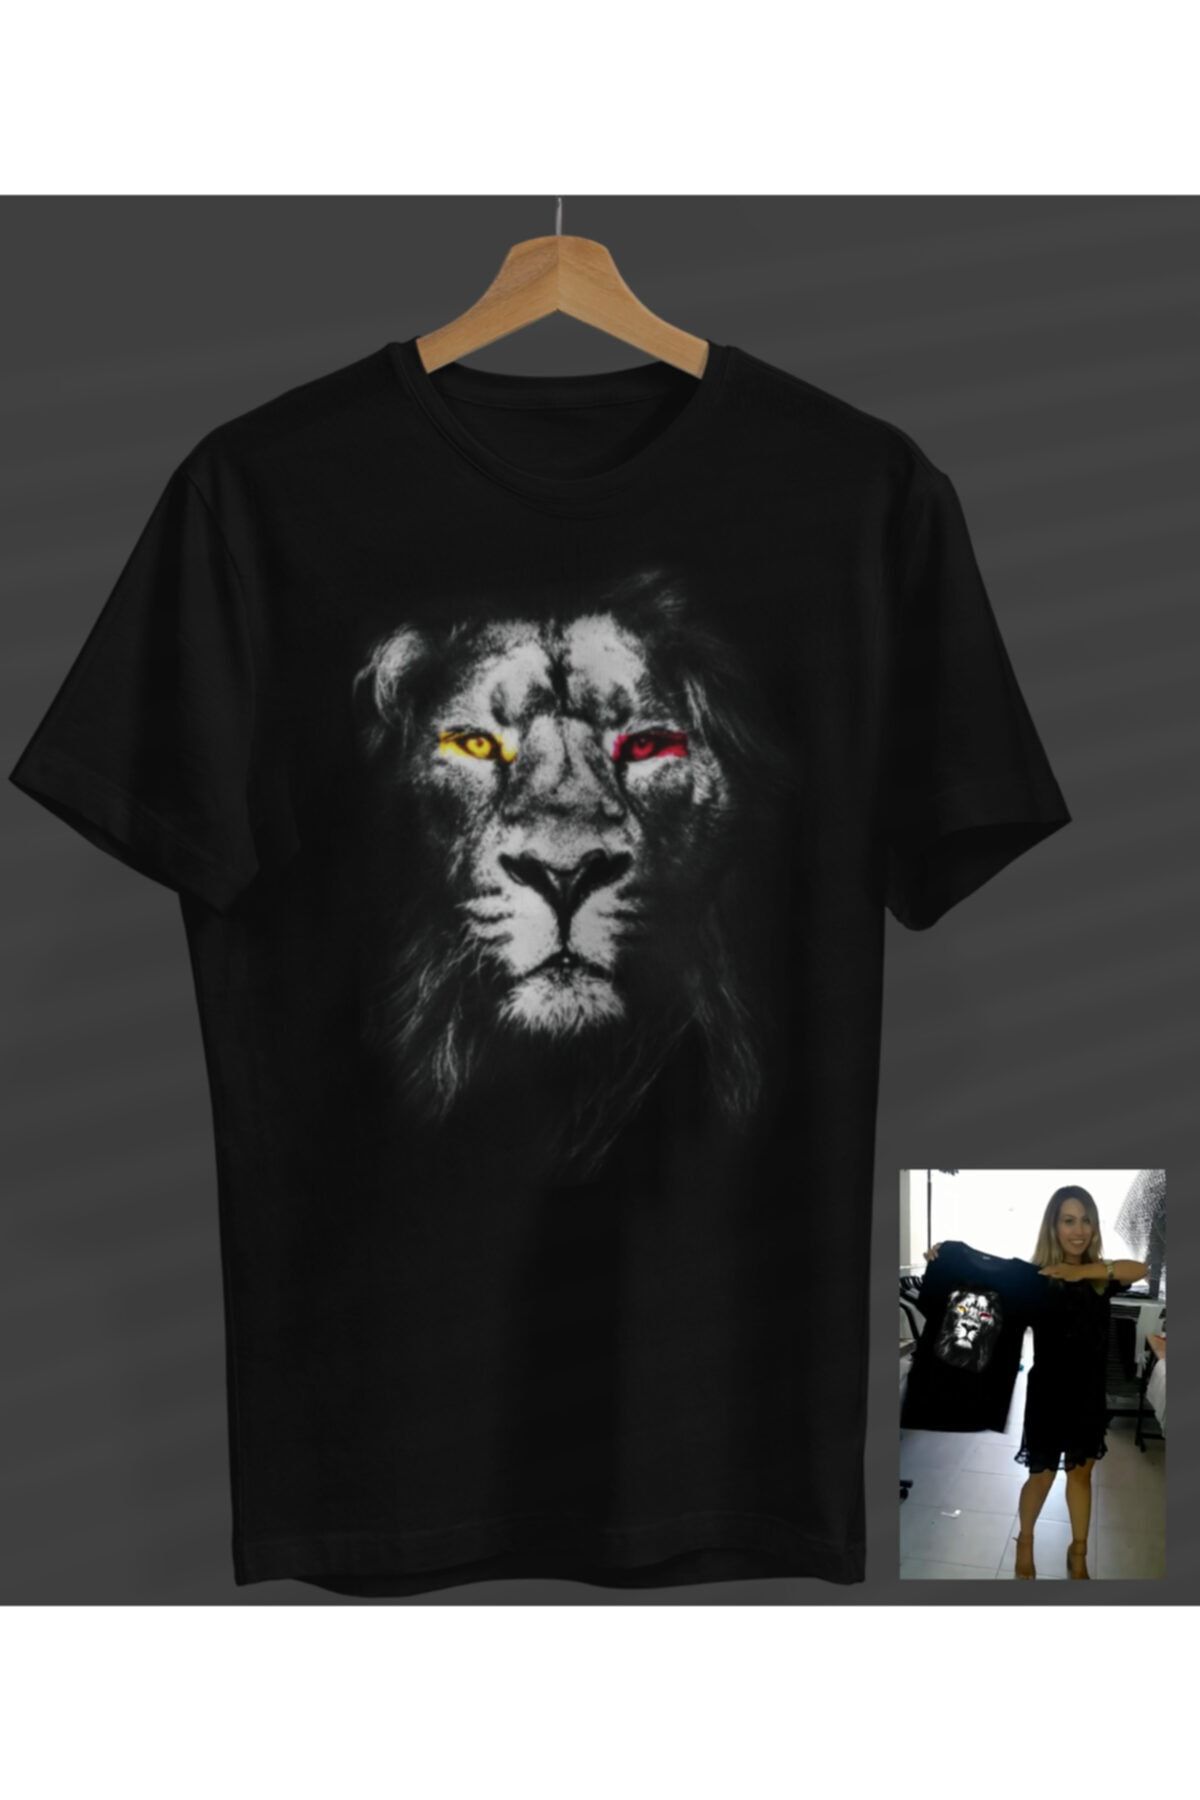 NOVUMUS Unisex Kadın-erkek Asil Aslan Tasarım Siyah Yuvarlak Yaka T-shirt